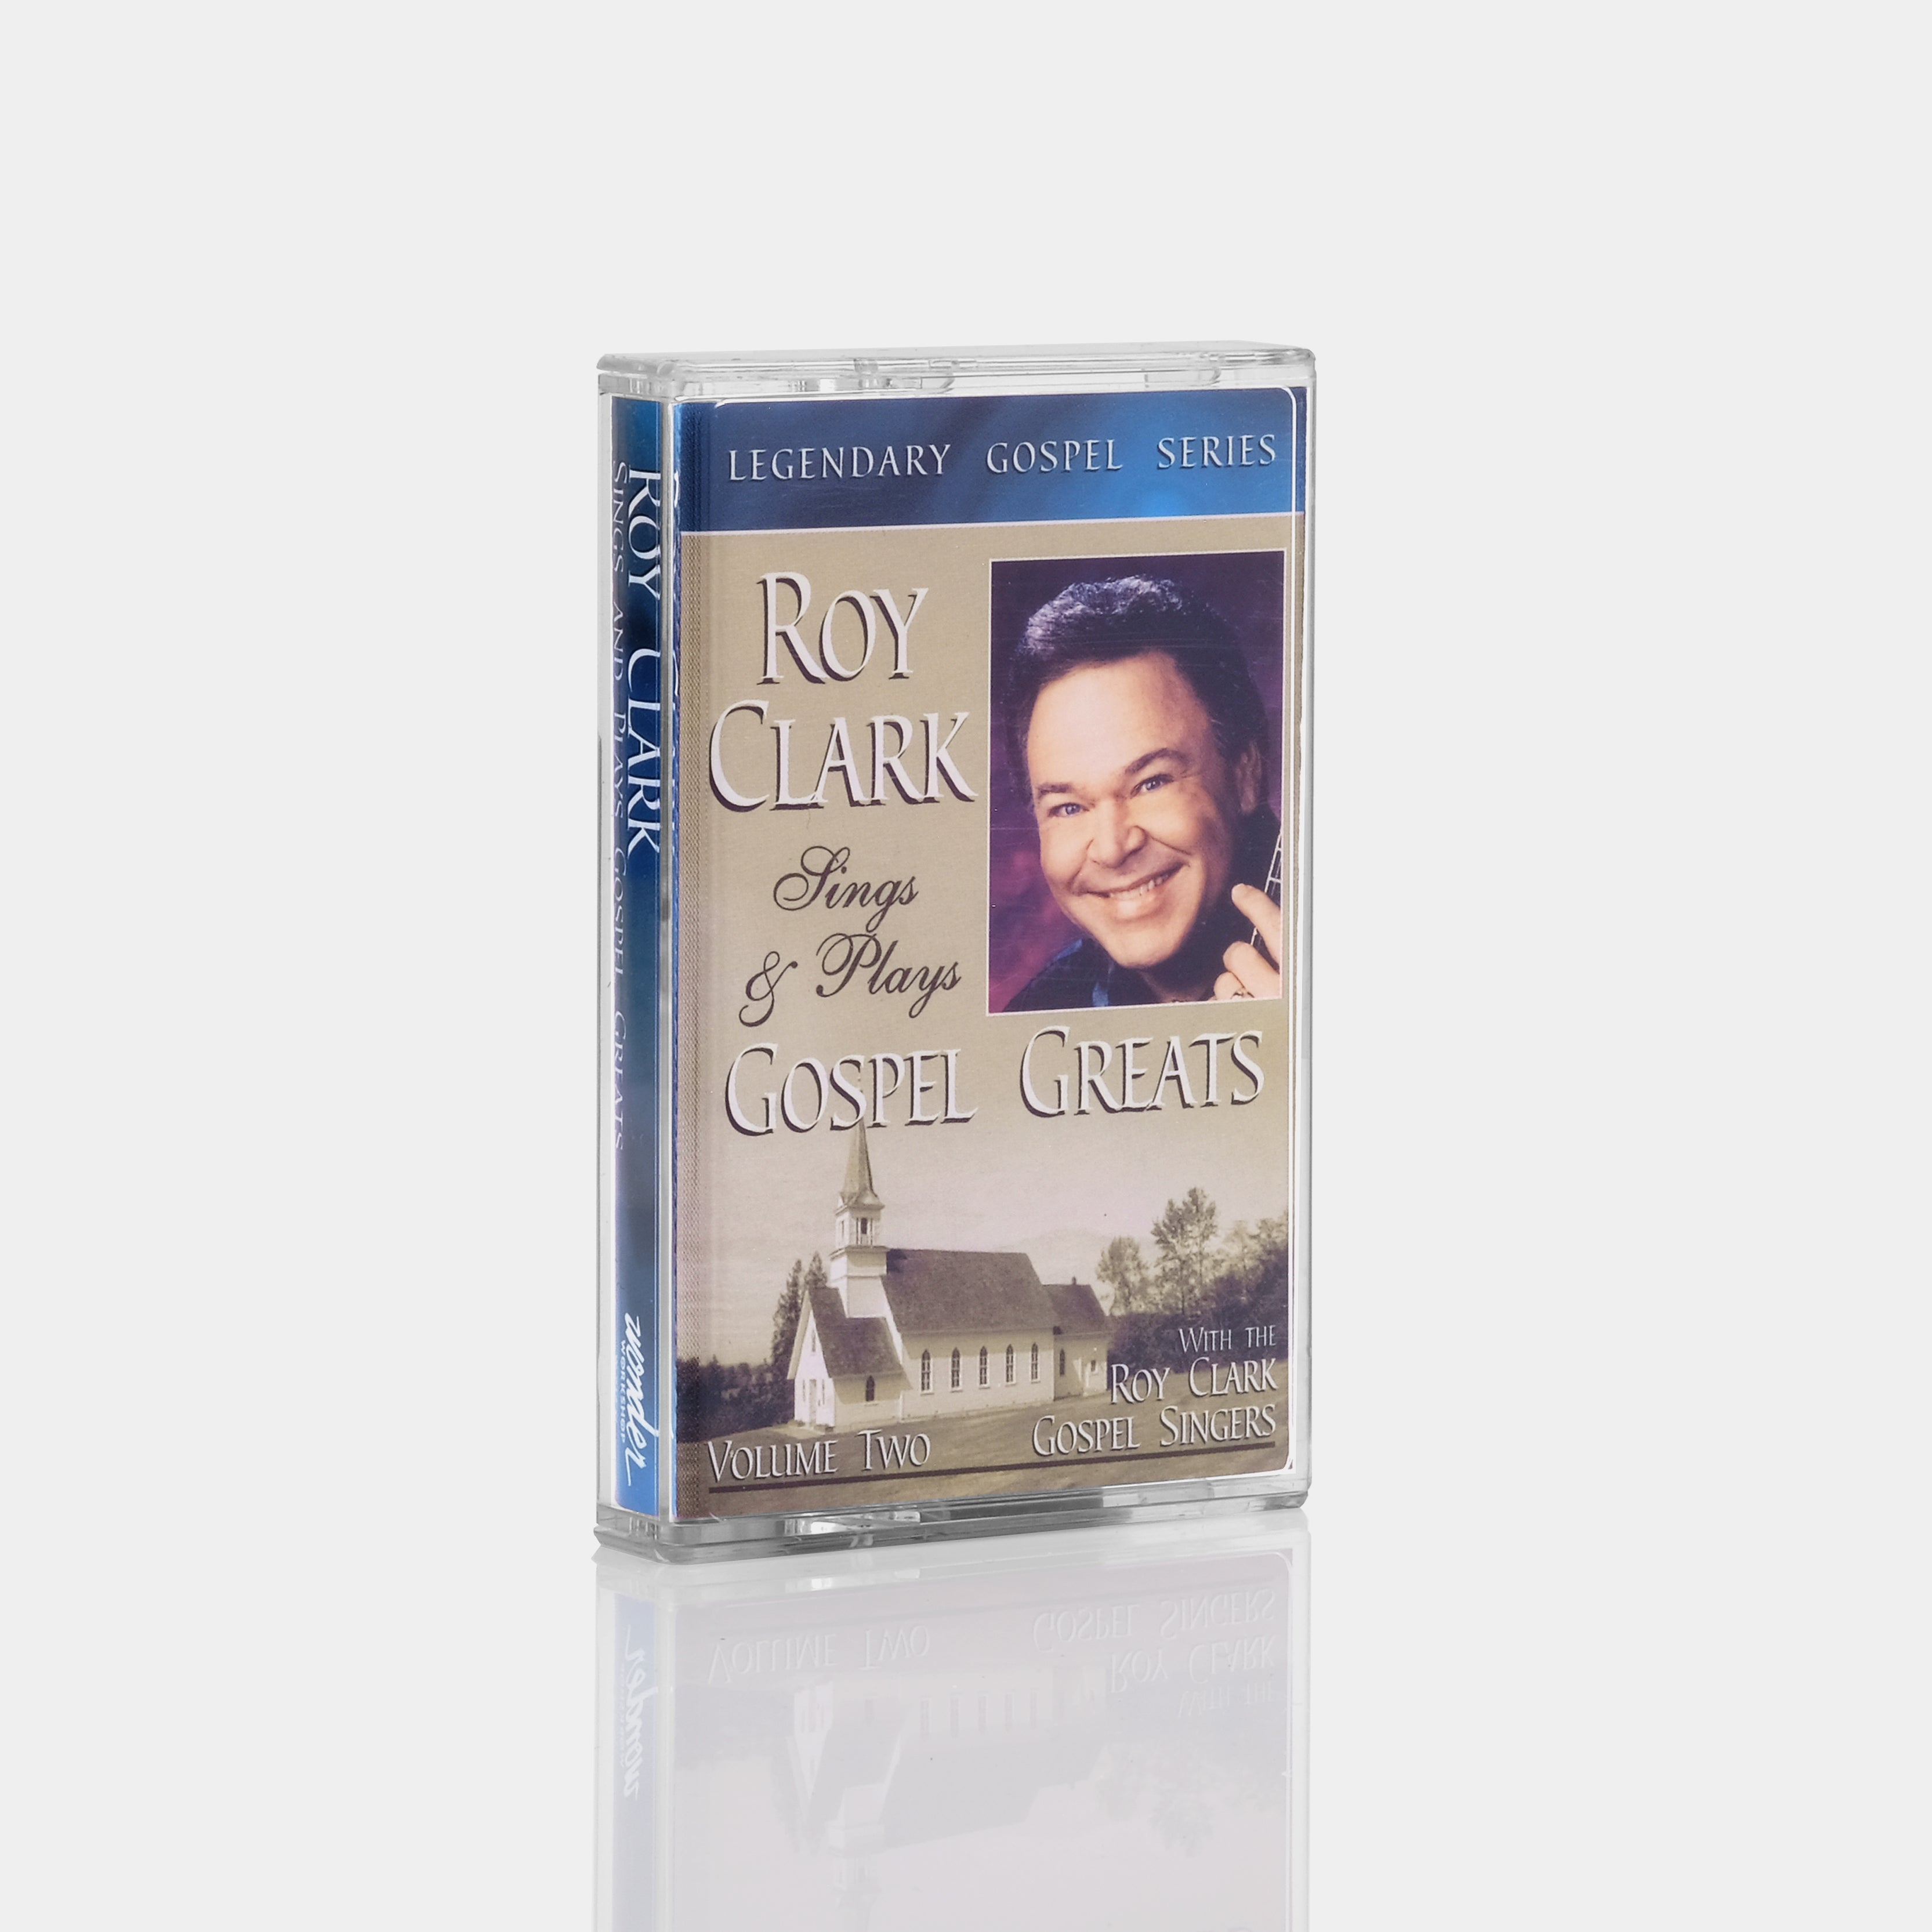 Roy Clark - Sings & Plays Gospel Greats (Volume Two) Cassette Tape